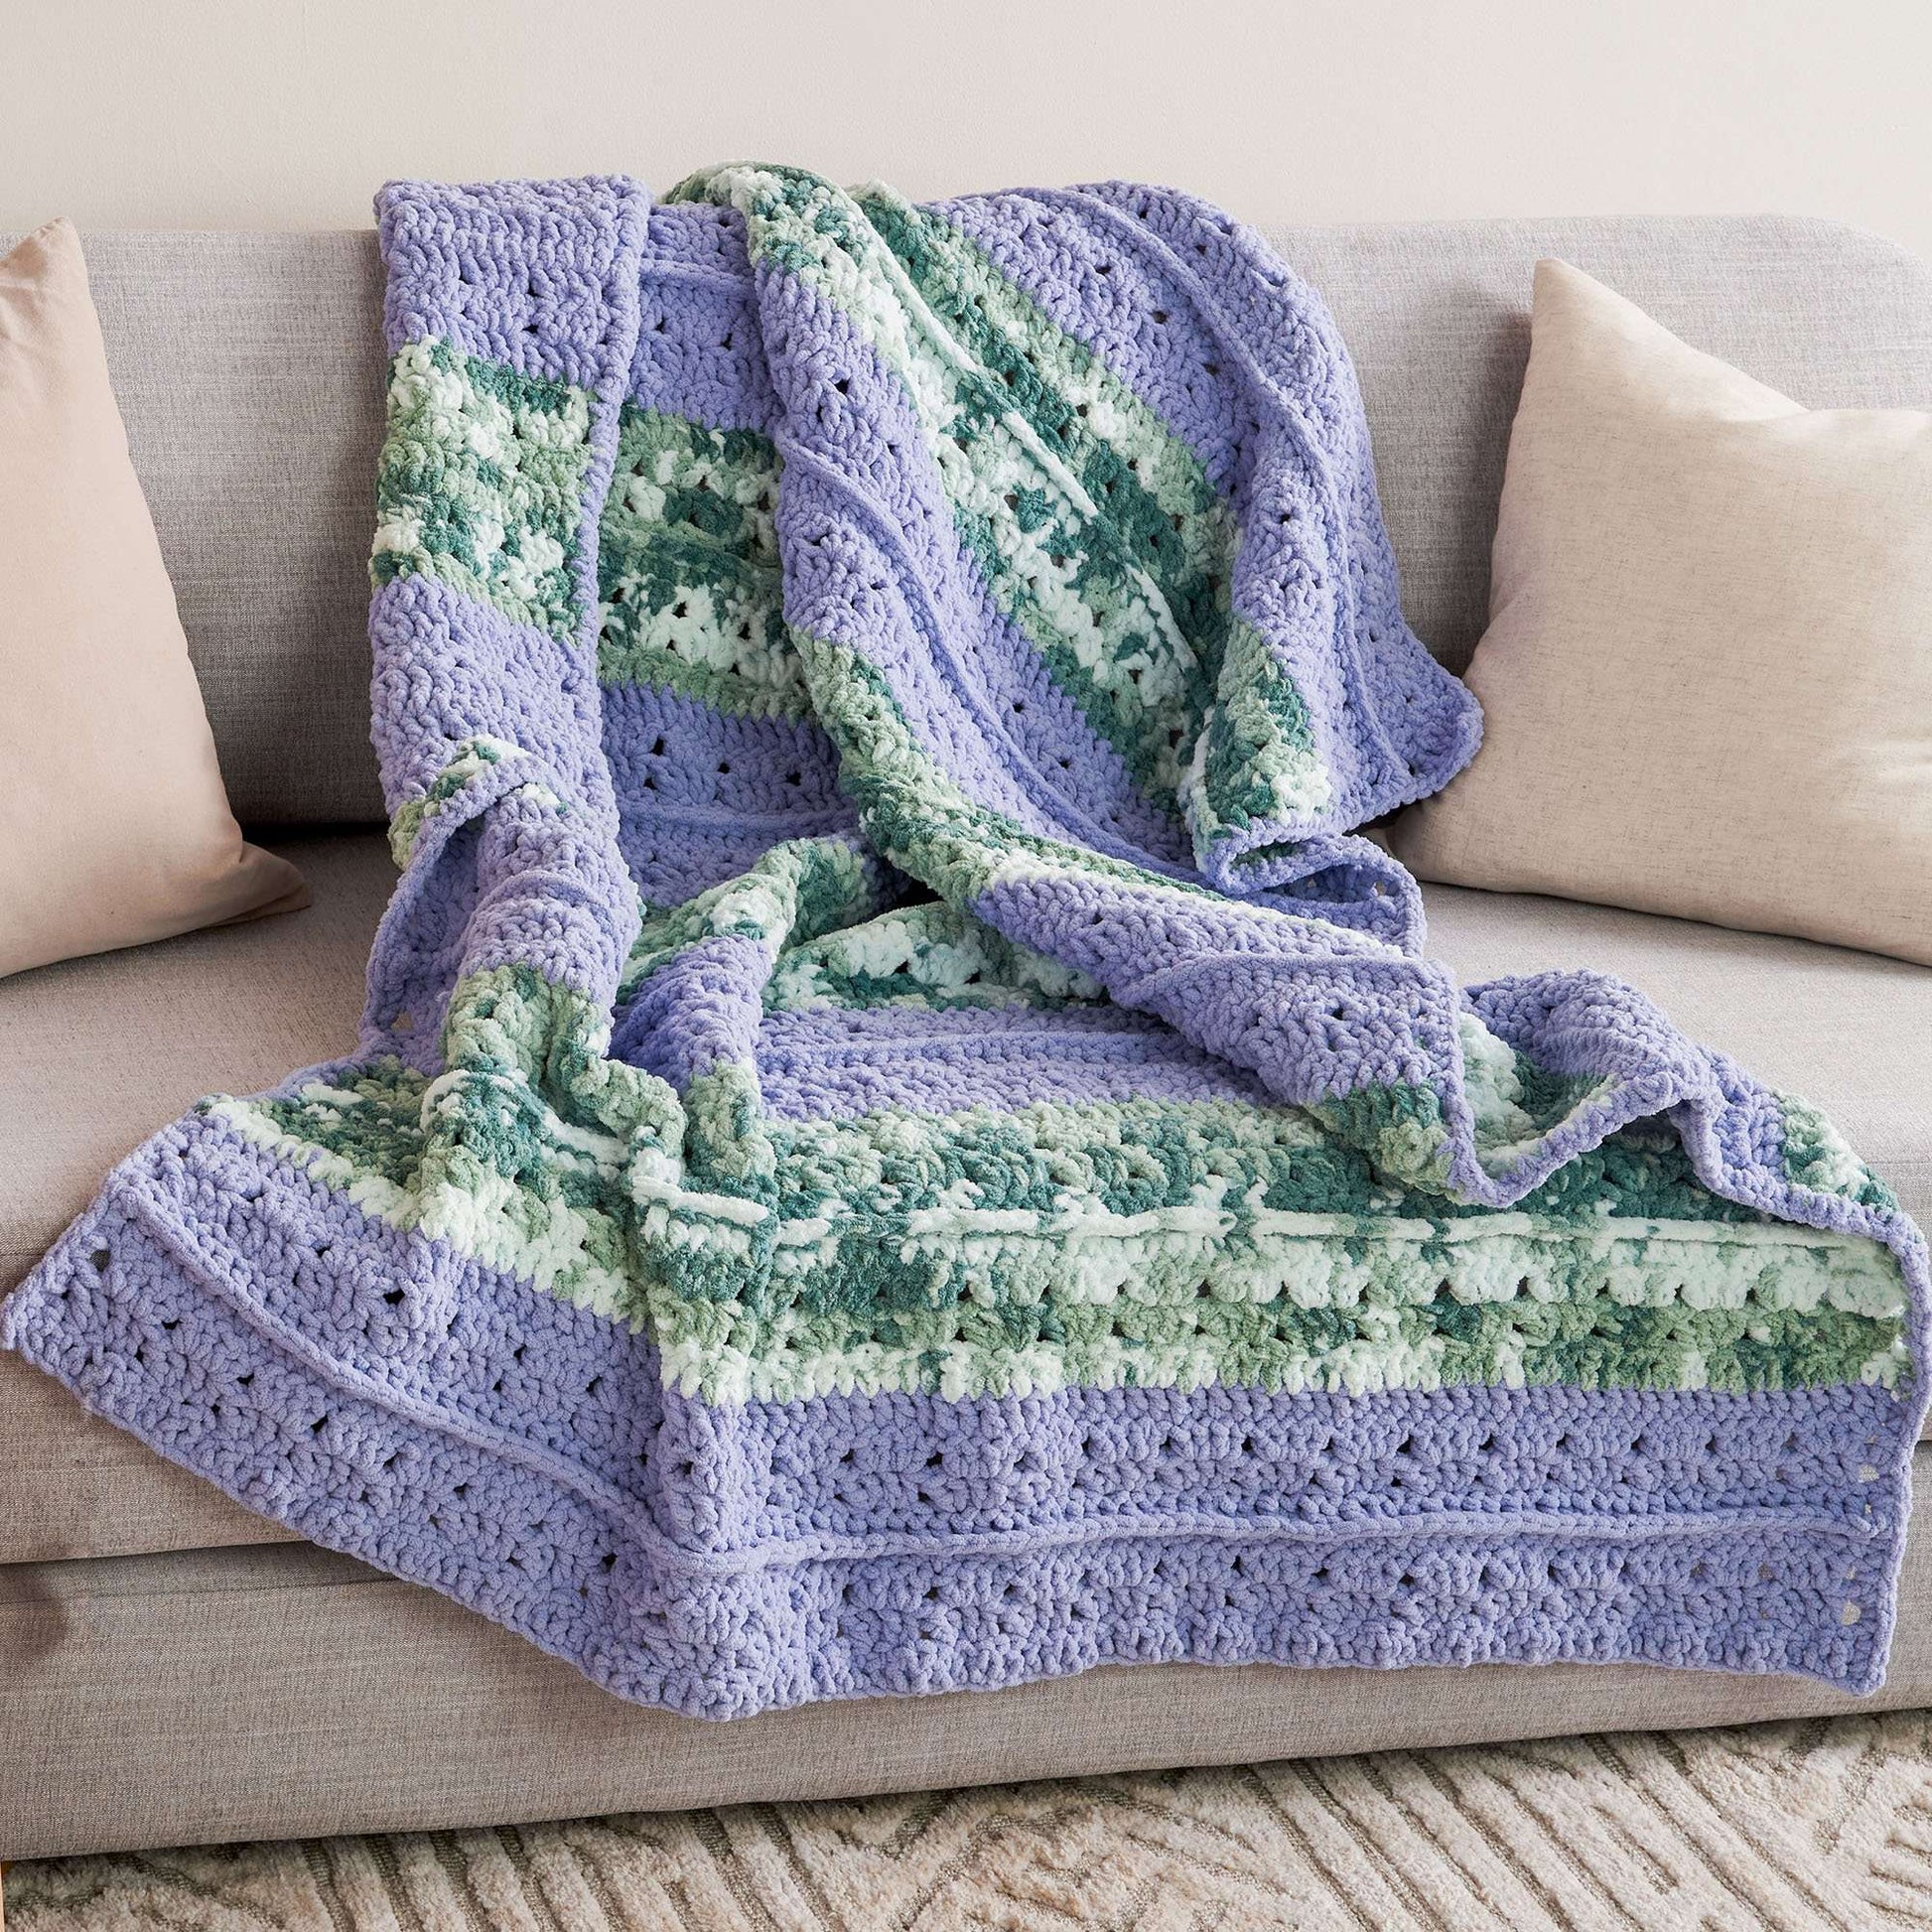 Free Bernat Crochet Textured Life Blanket Pattern